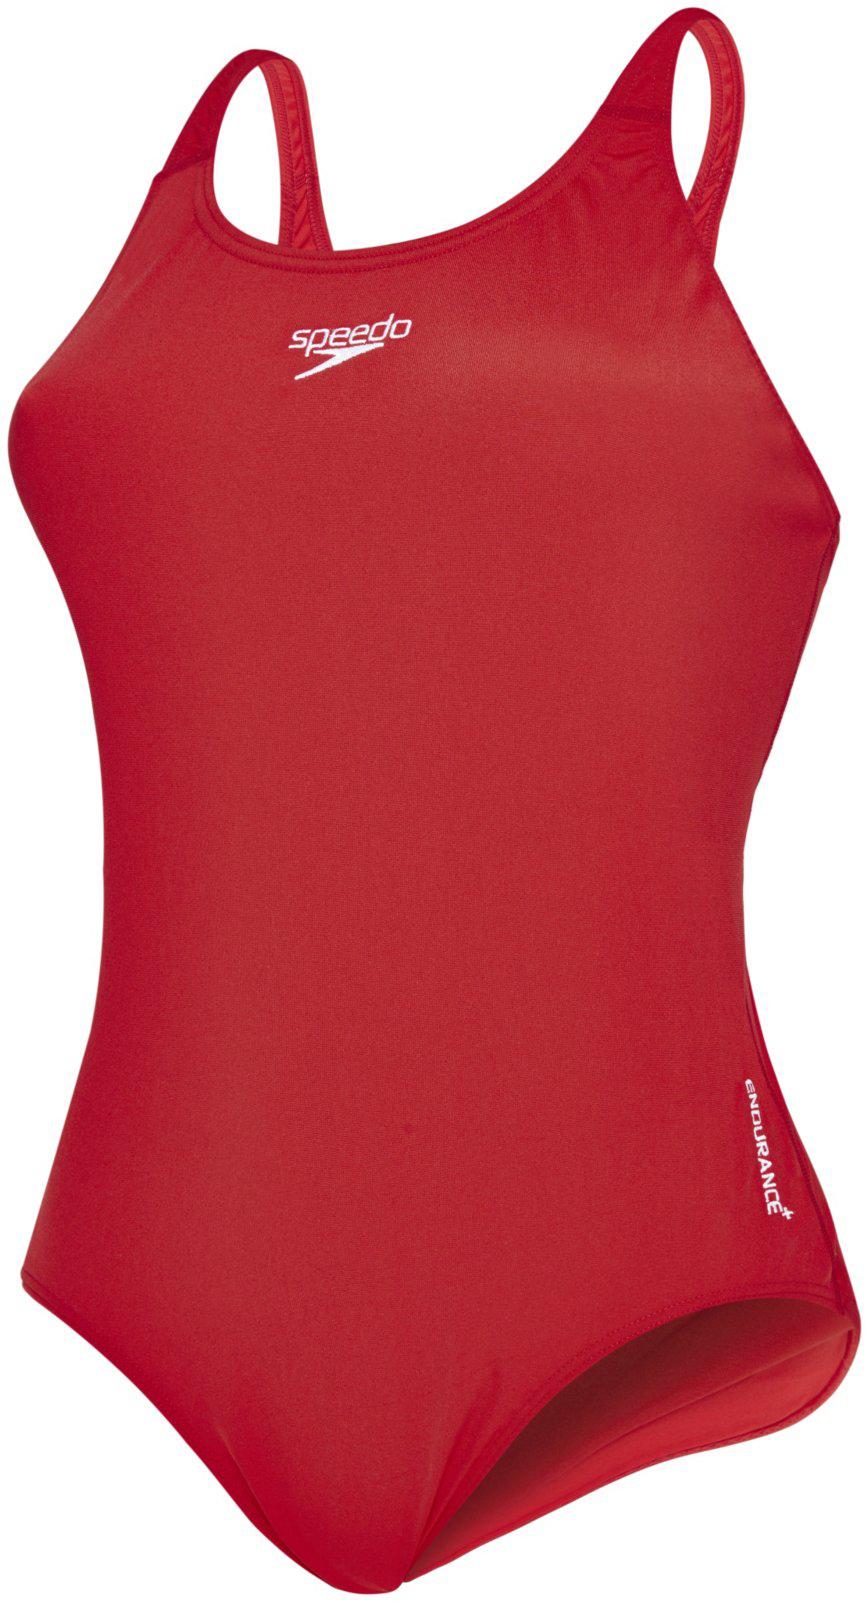 Speedo Womens Endurance Plus Medalist Swimsuit - Usa Red